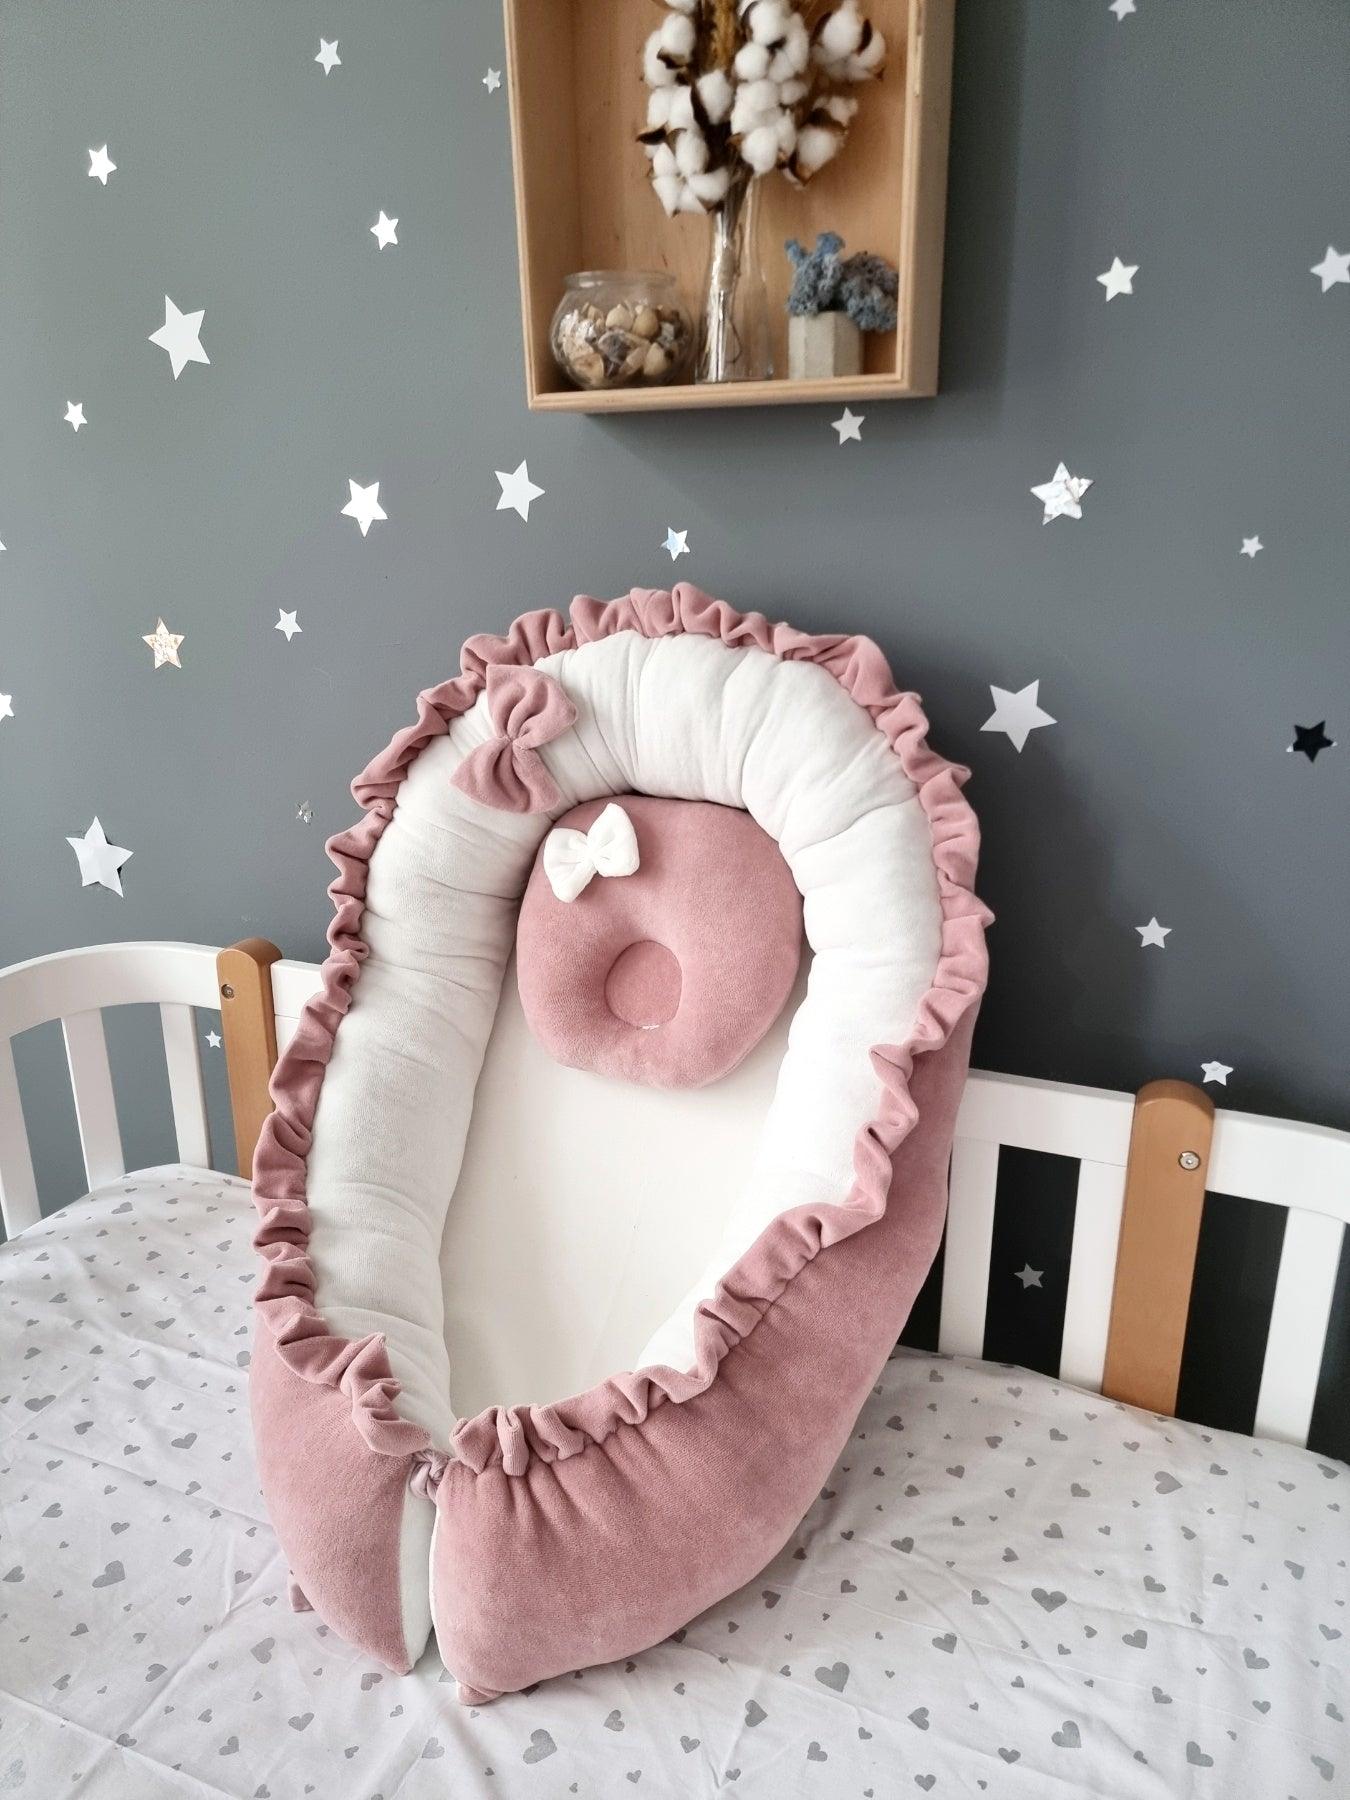 Personalized baby bedding set lavender. Braided crib bumper - KariStudio